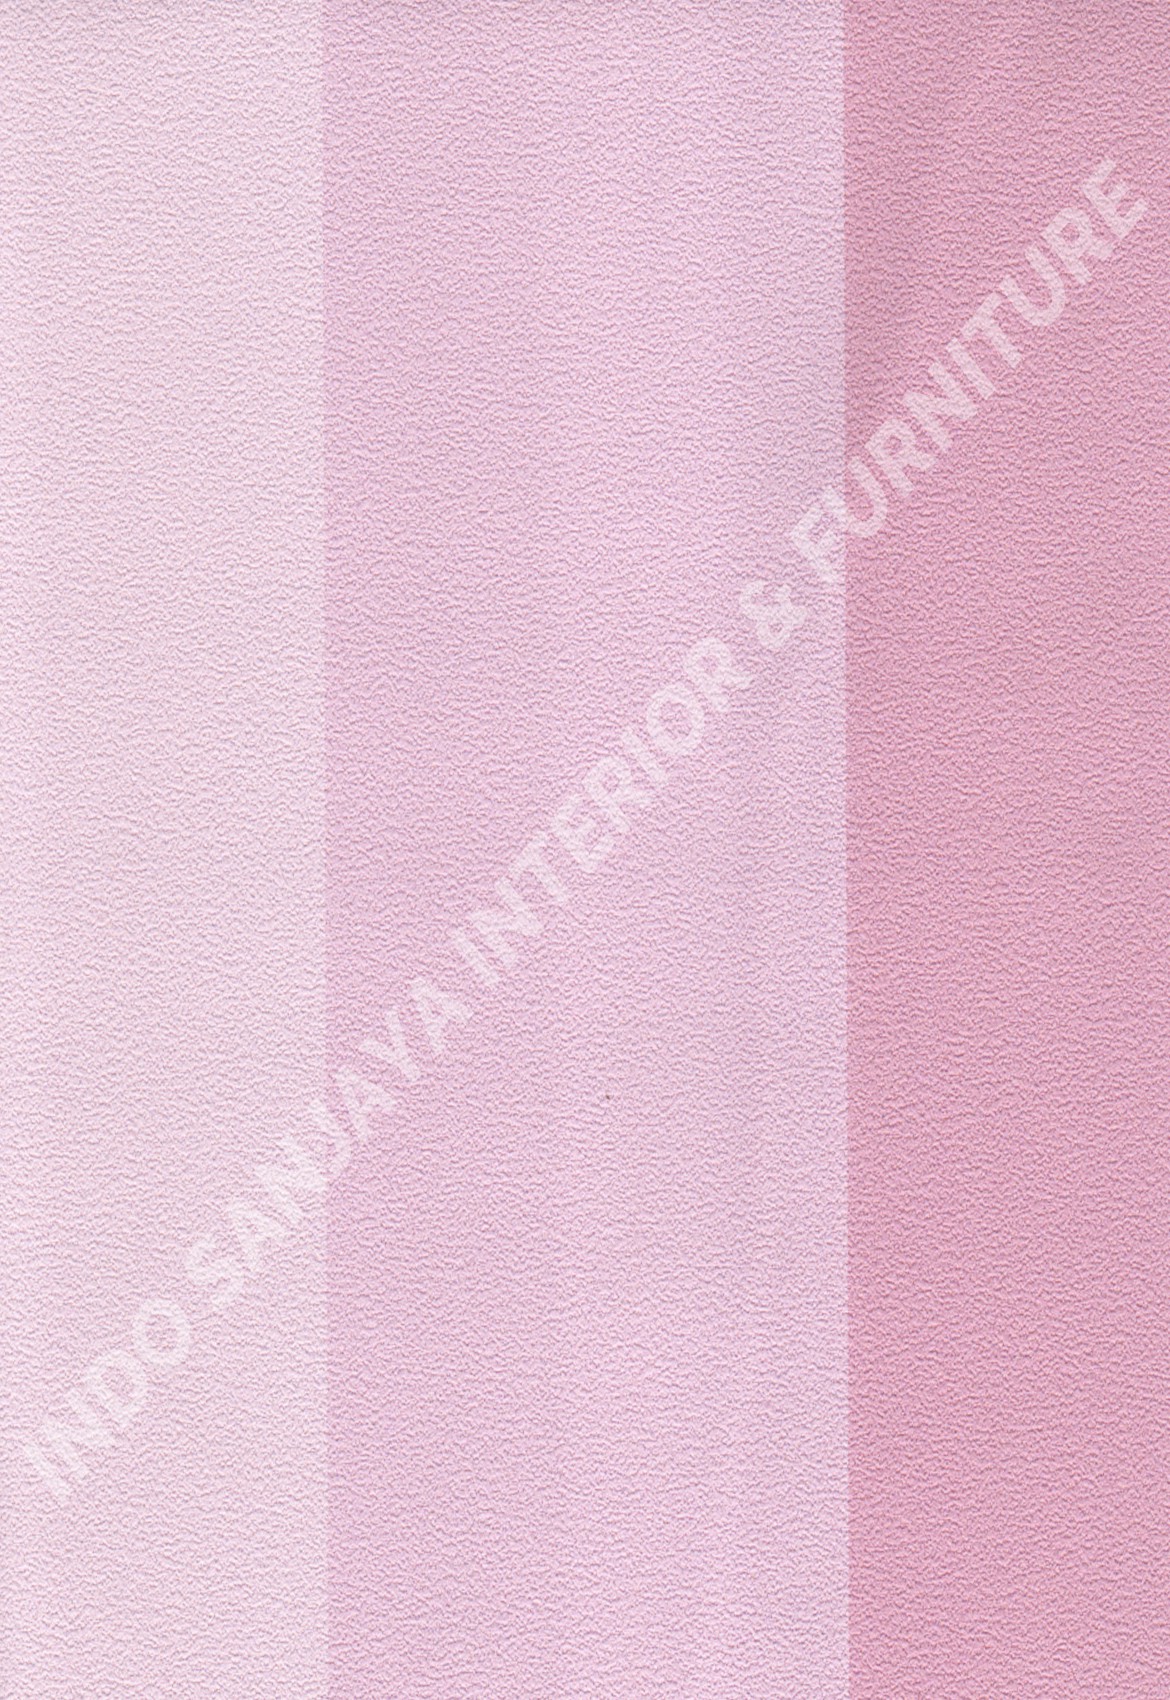 Wallpaper Symphony - Tints And Shades - HD Wallpaper 